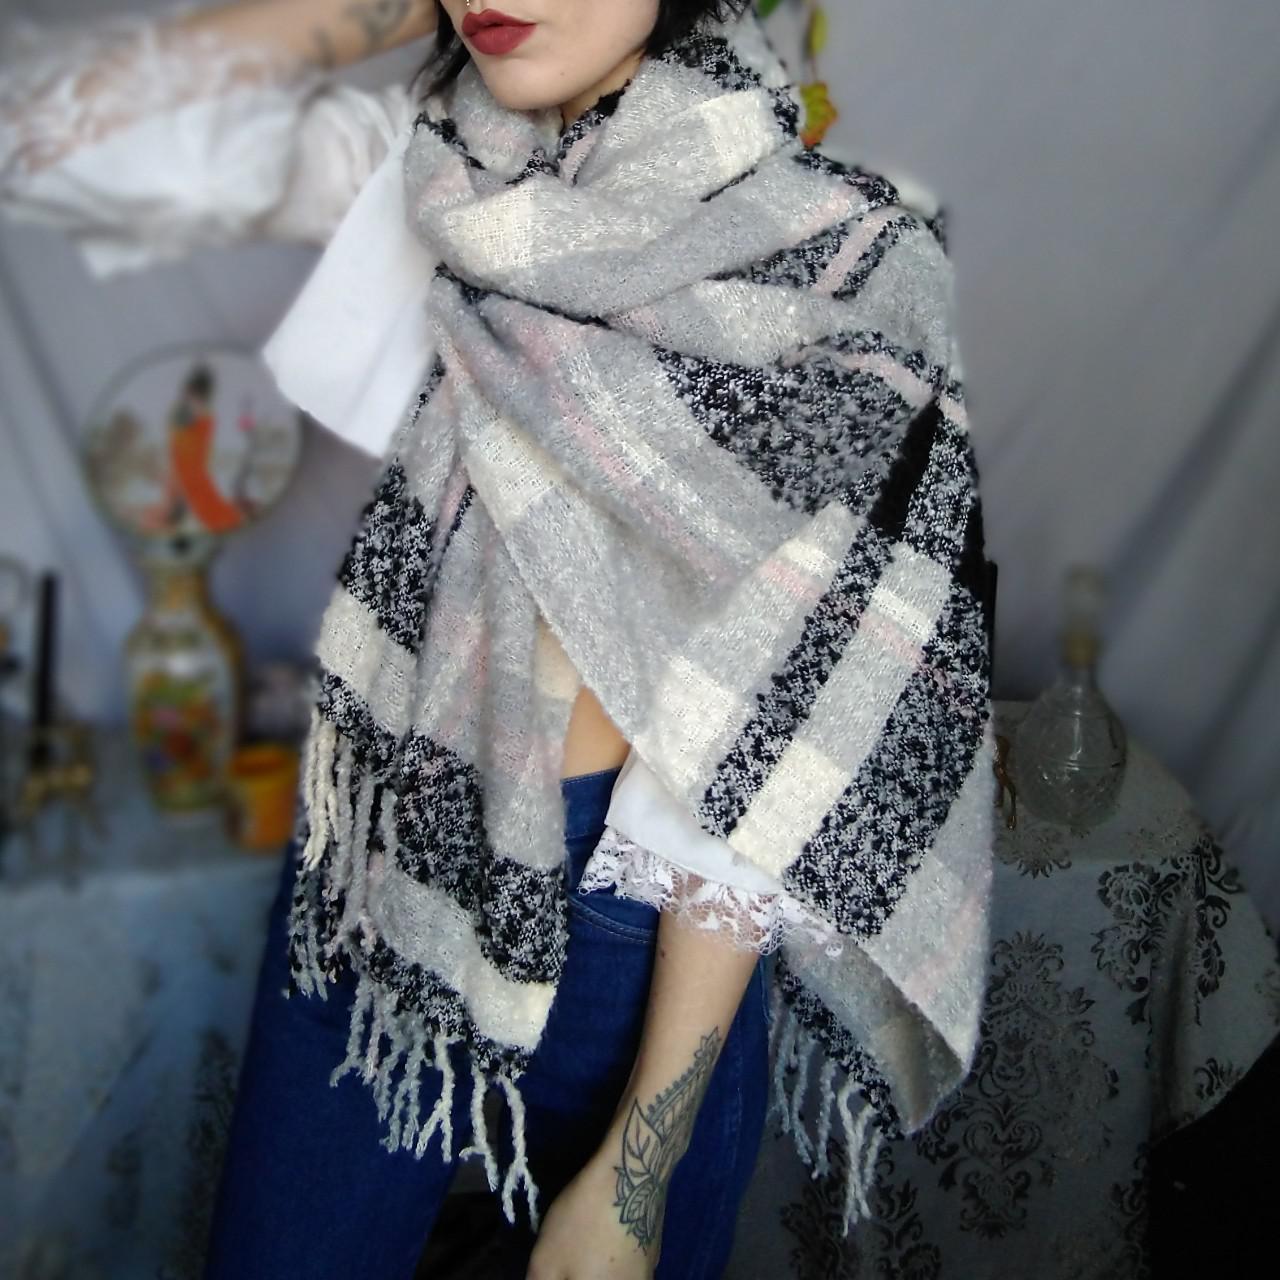 Product Image 1 - Large plaid blanket style scarf